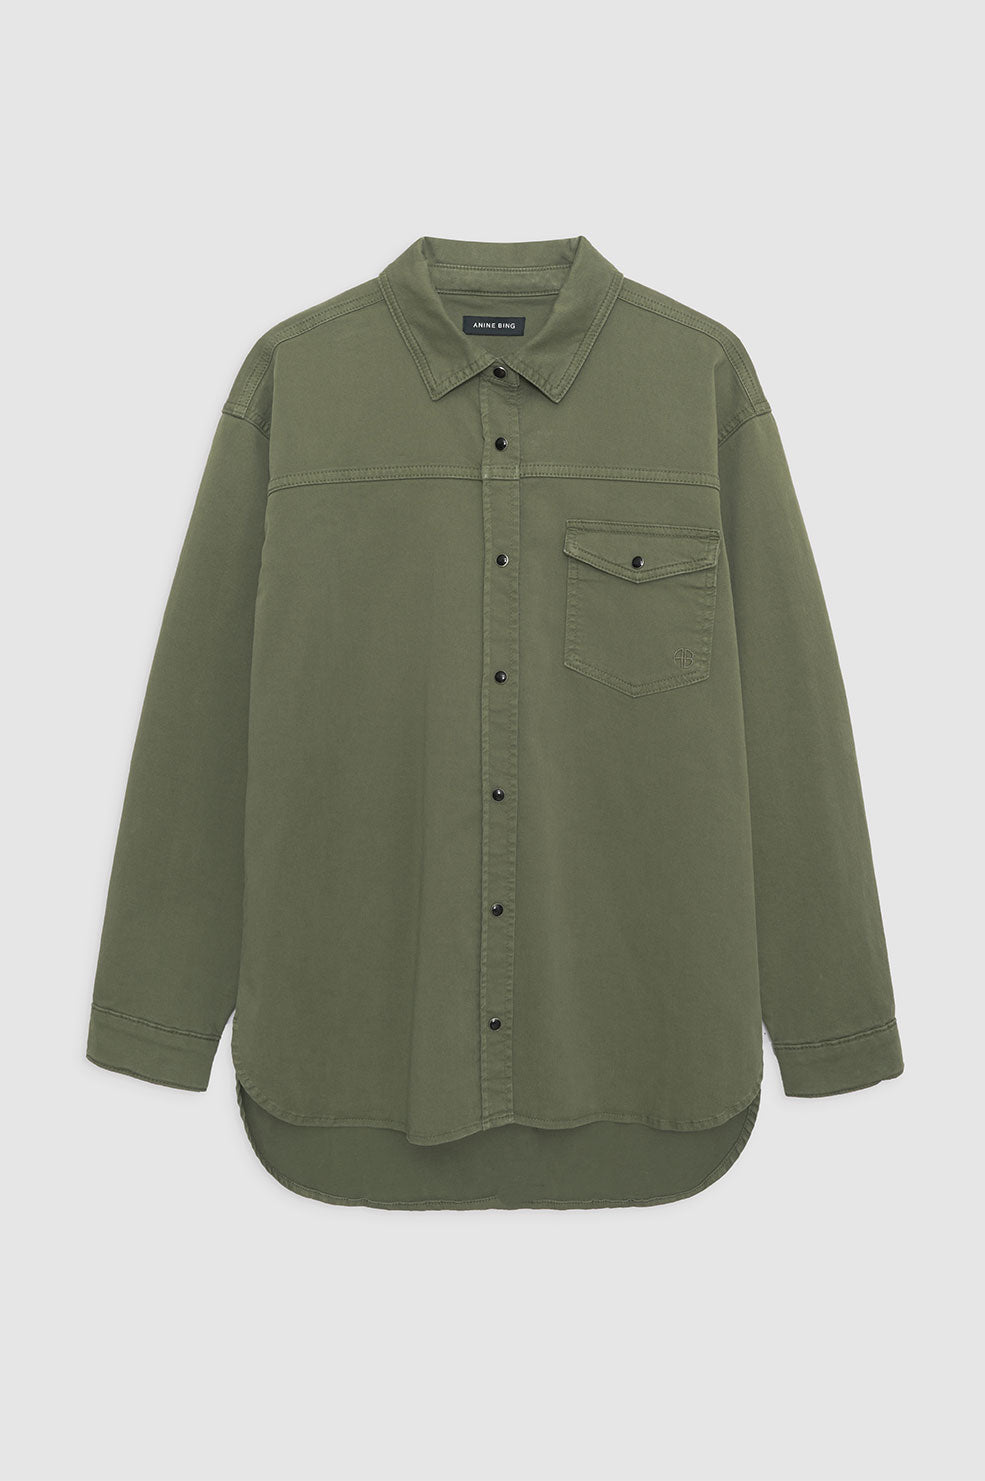 ANINE BING Sloan Shirt - Army Green - Front View